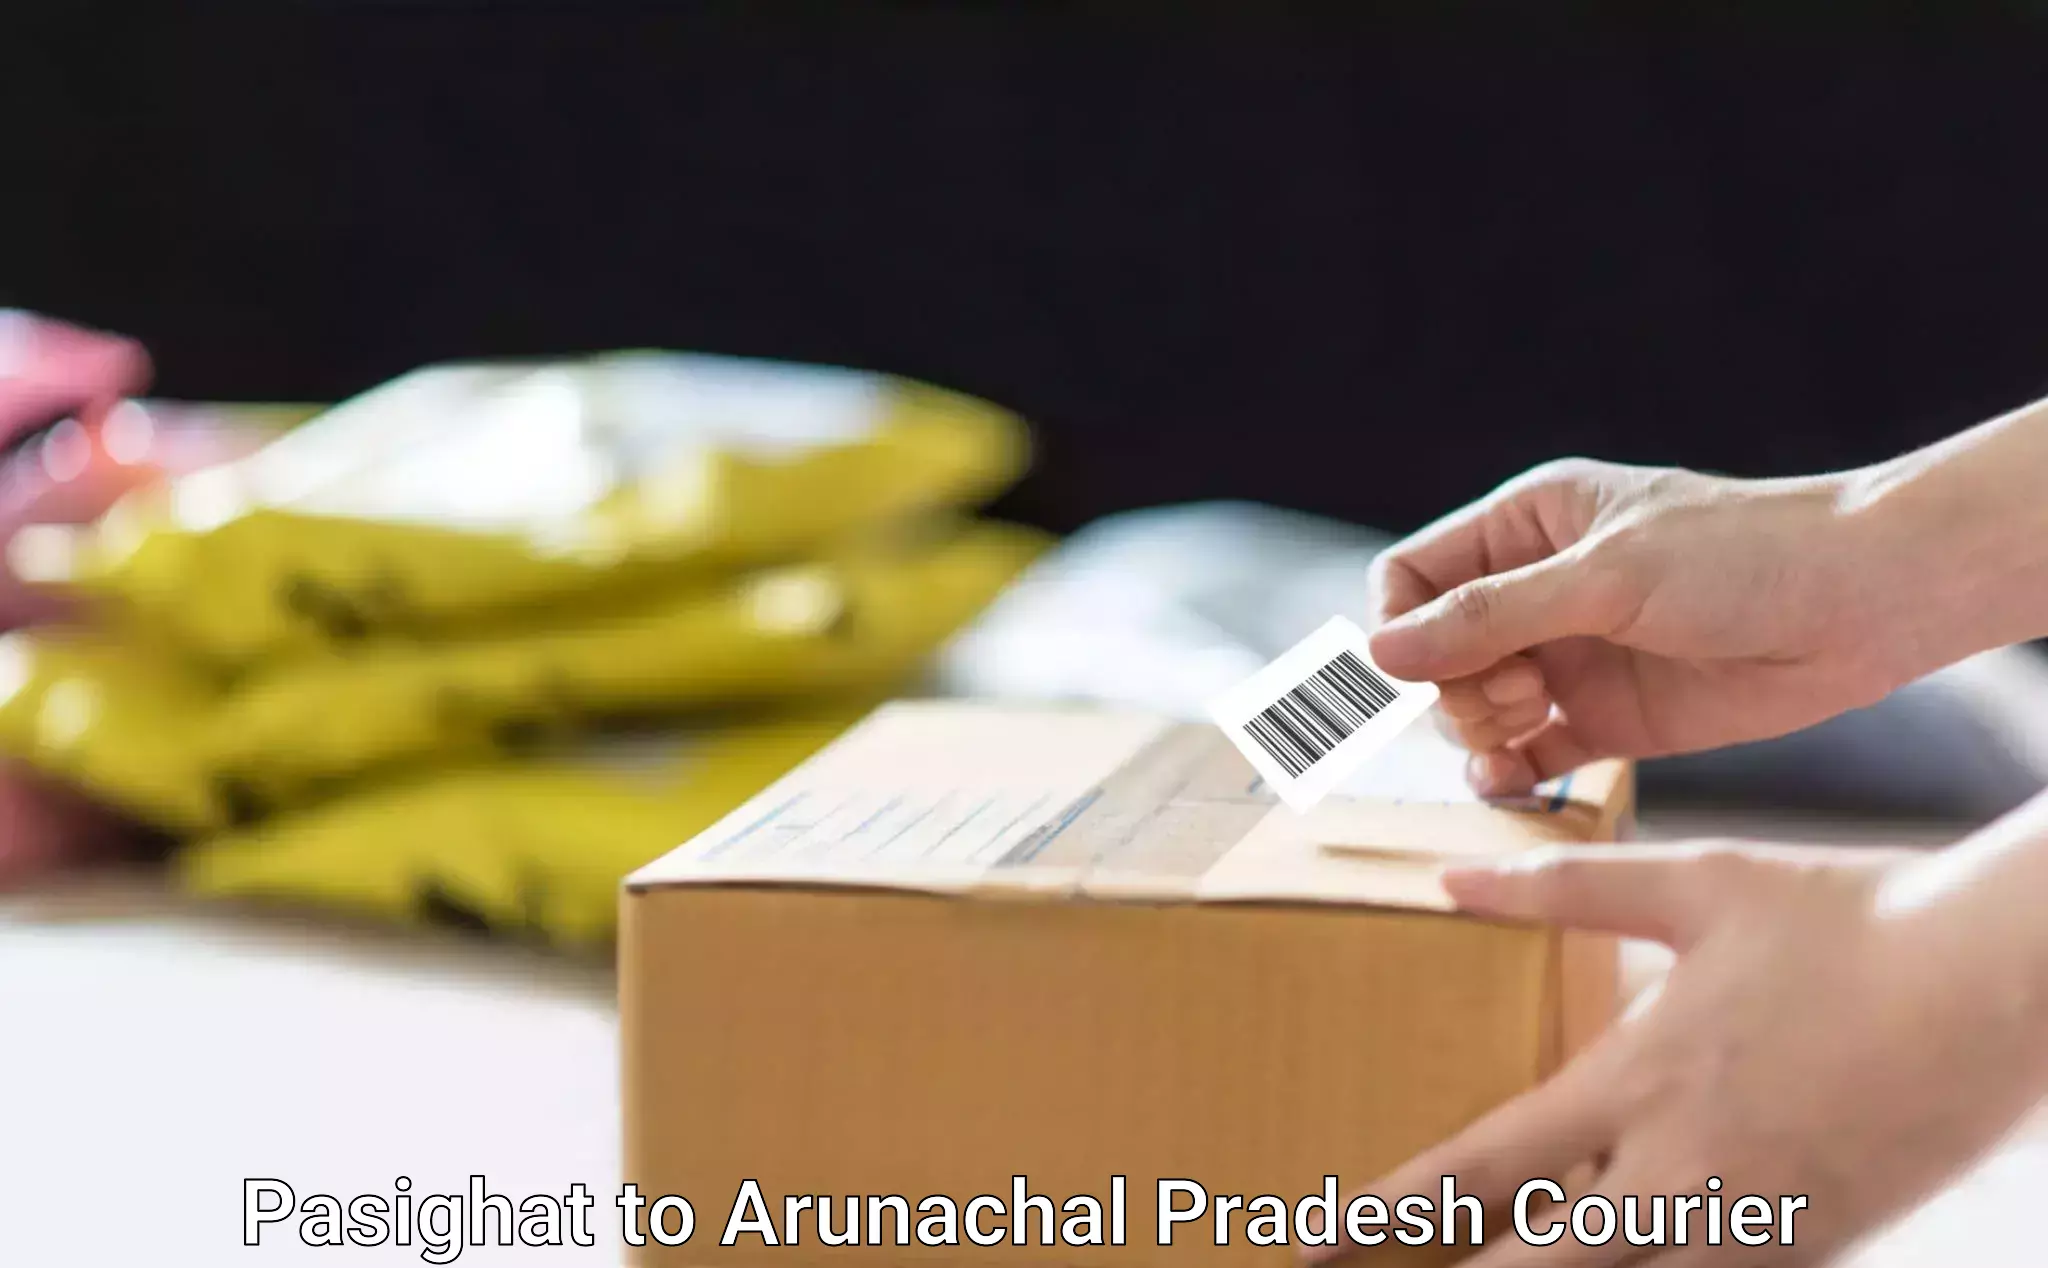 Pharmaceutical courier Pasighat to Arunachal Pradesh